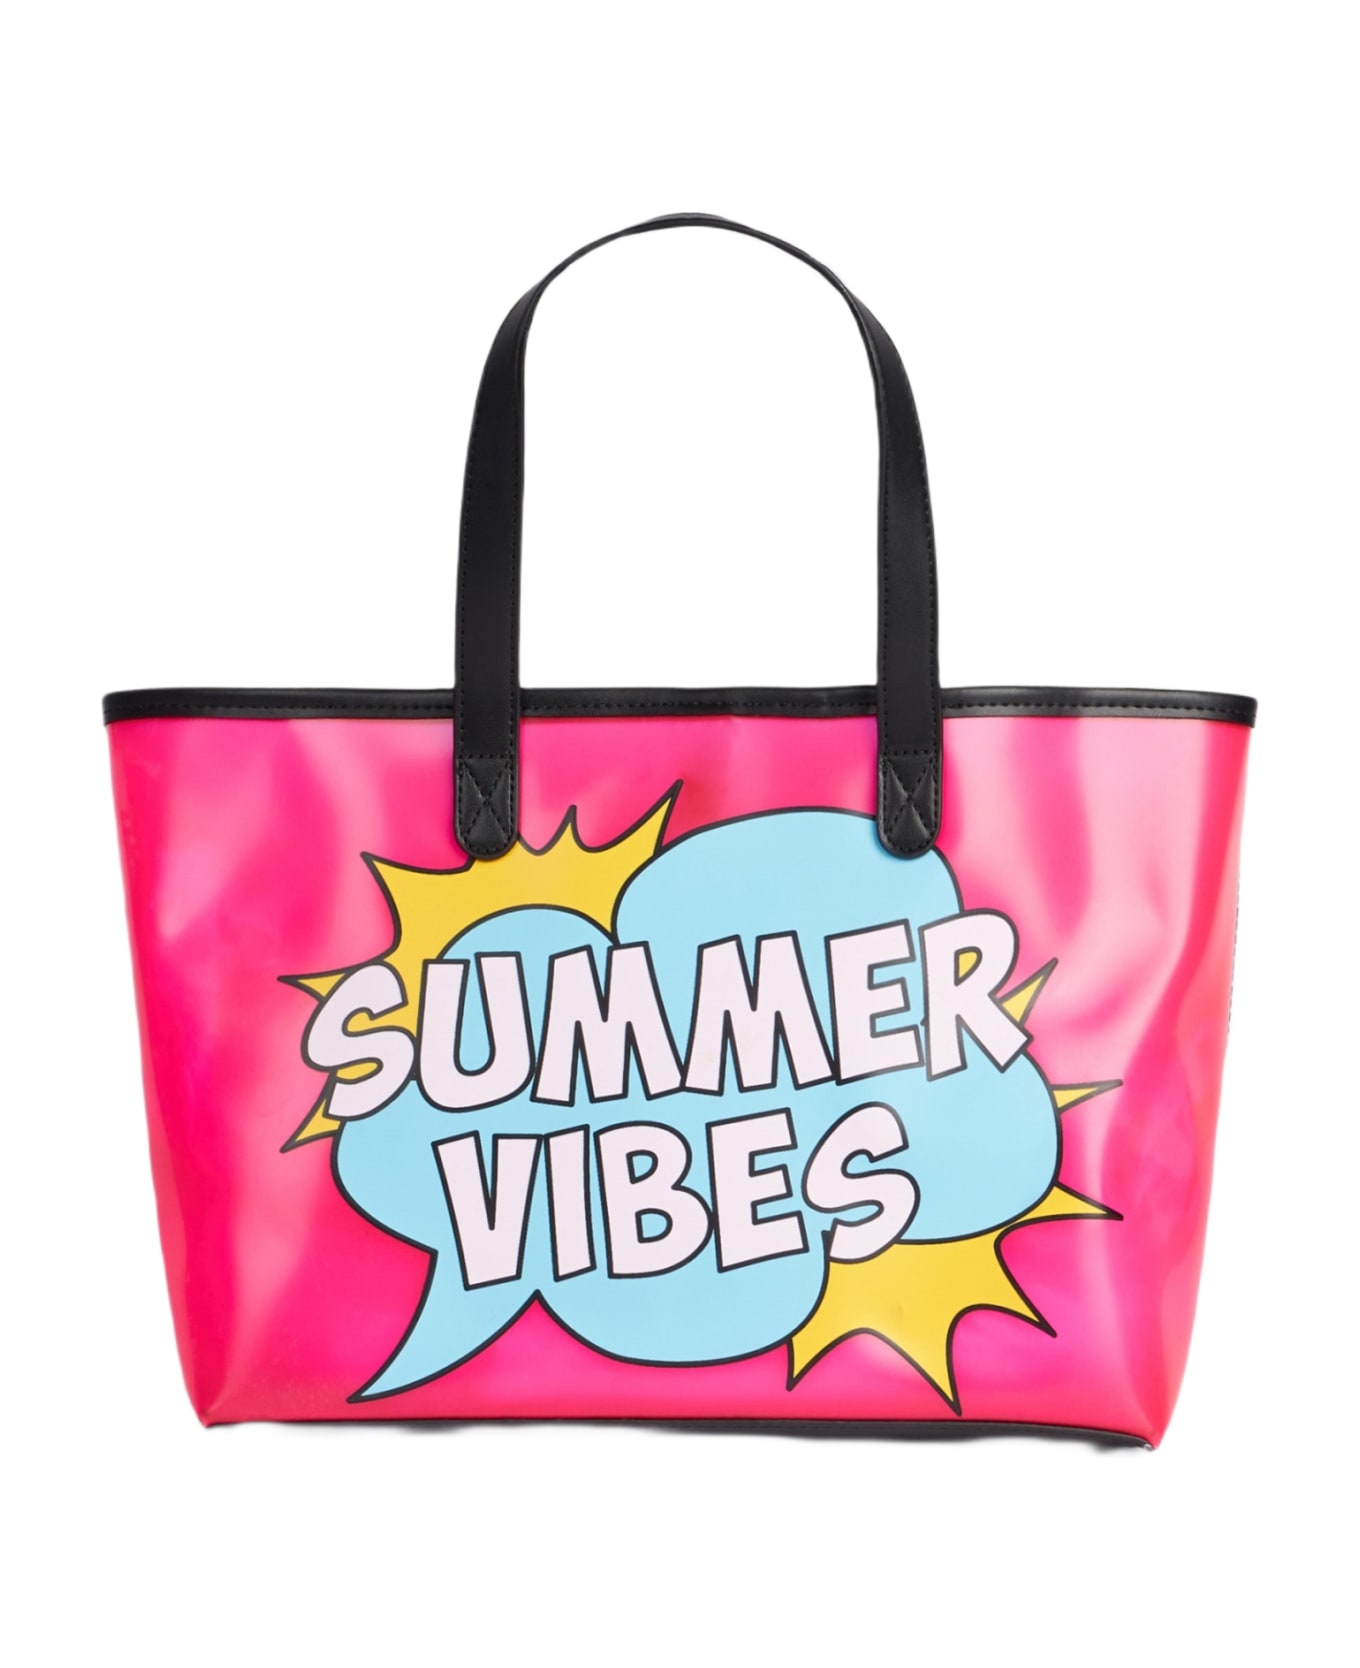 MC2 Saint Barth Pink Transparent Pvc Beach Bag With Summer Vibes Print - PINK